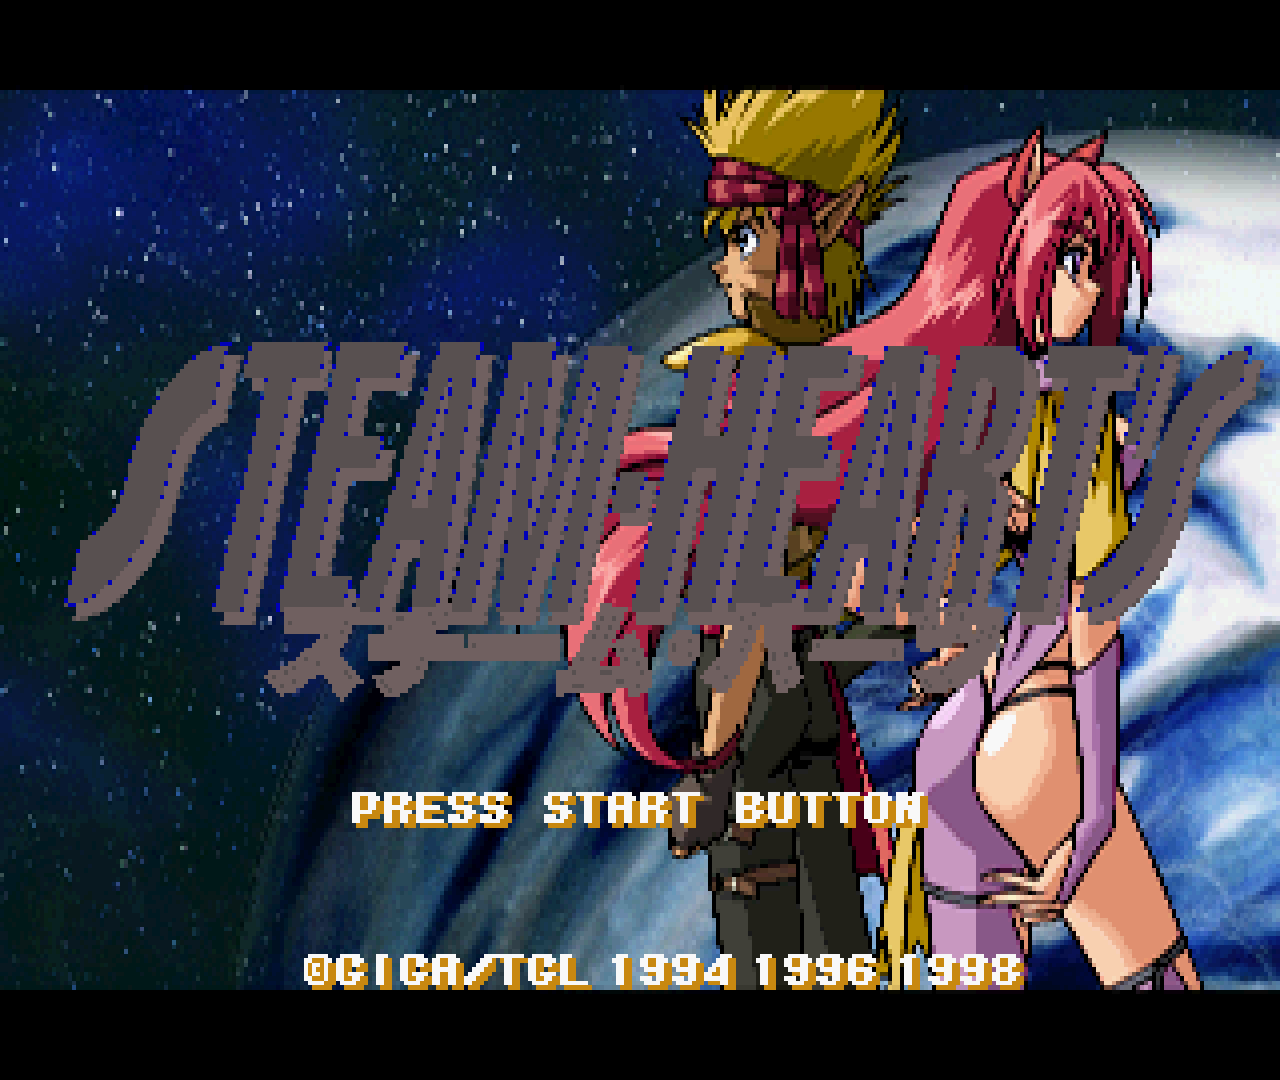 Figure 21 - Steam Hearts title screen on the Sega Saturn